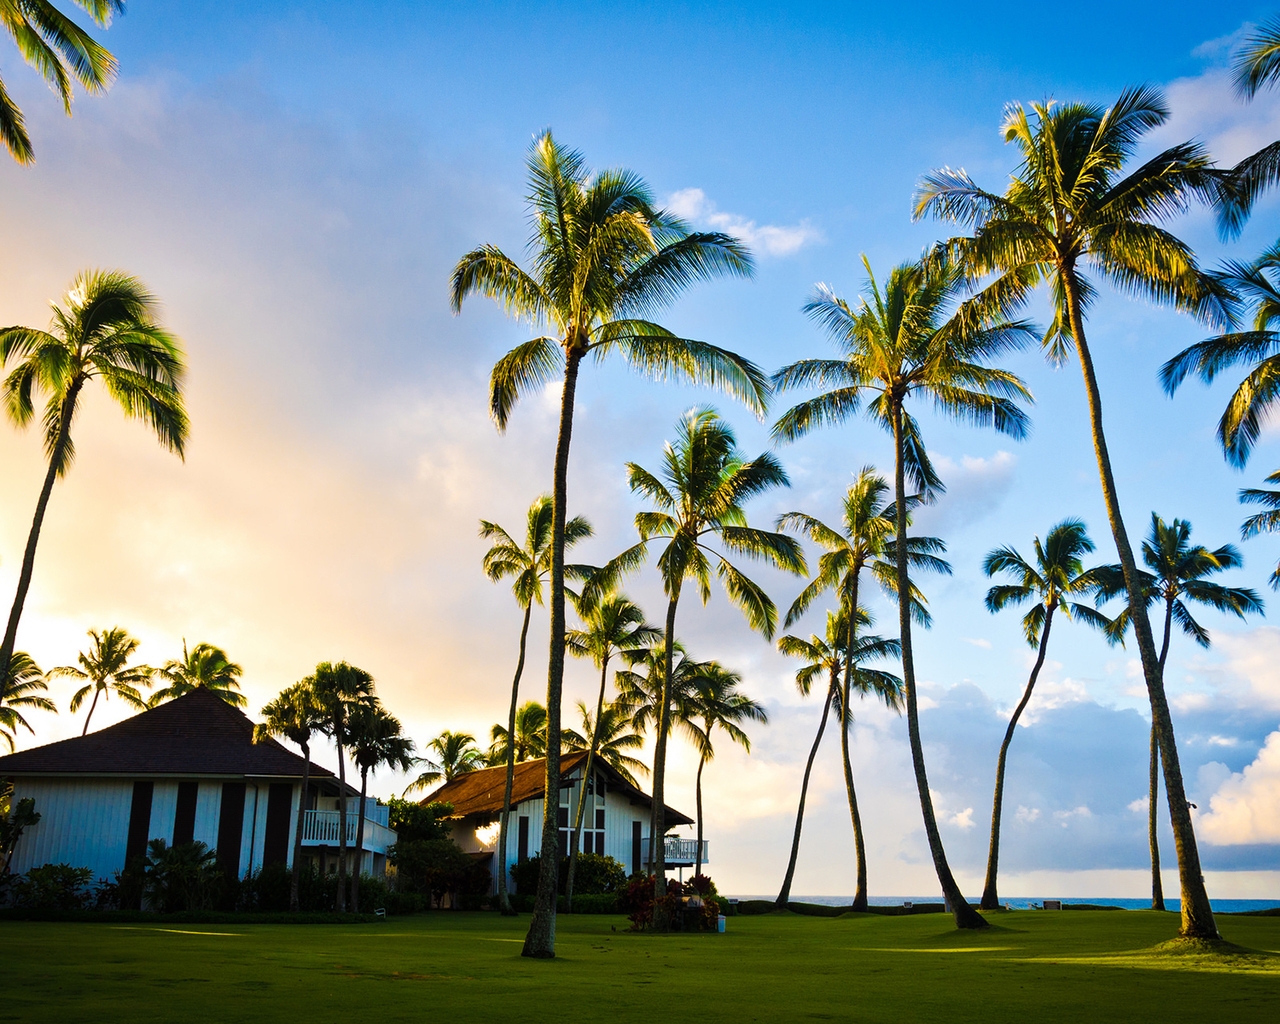 Hawaii Beach Houses for 1280 x 1024 resolution